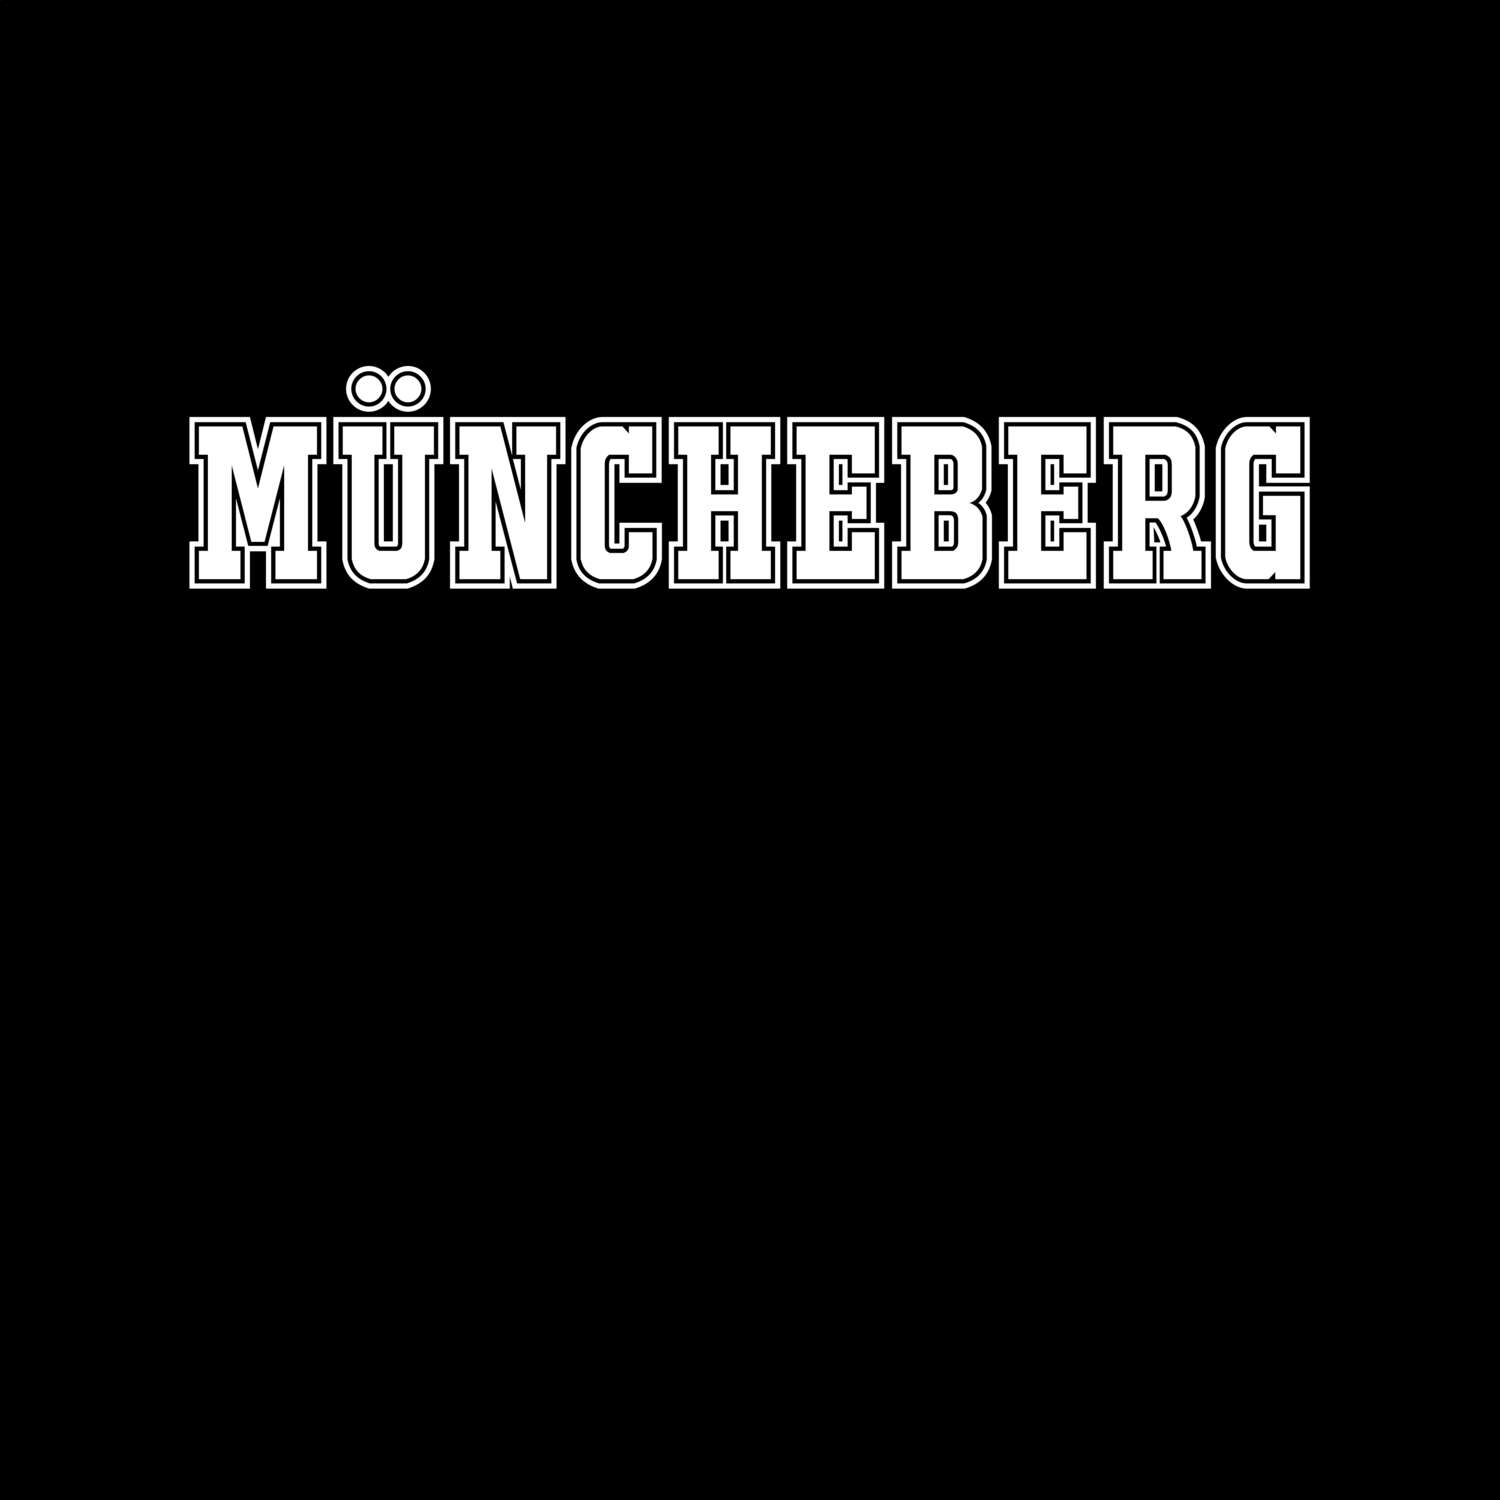 Müncheberg T-Shirt »Classic«